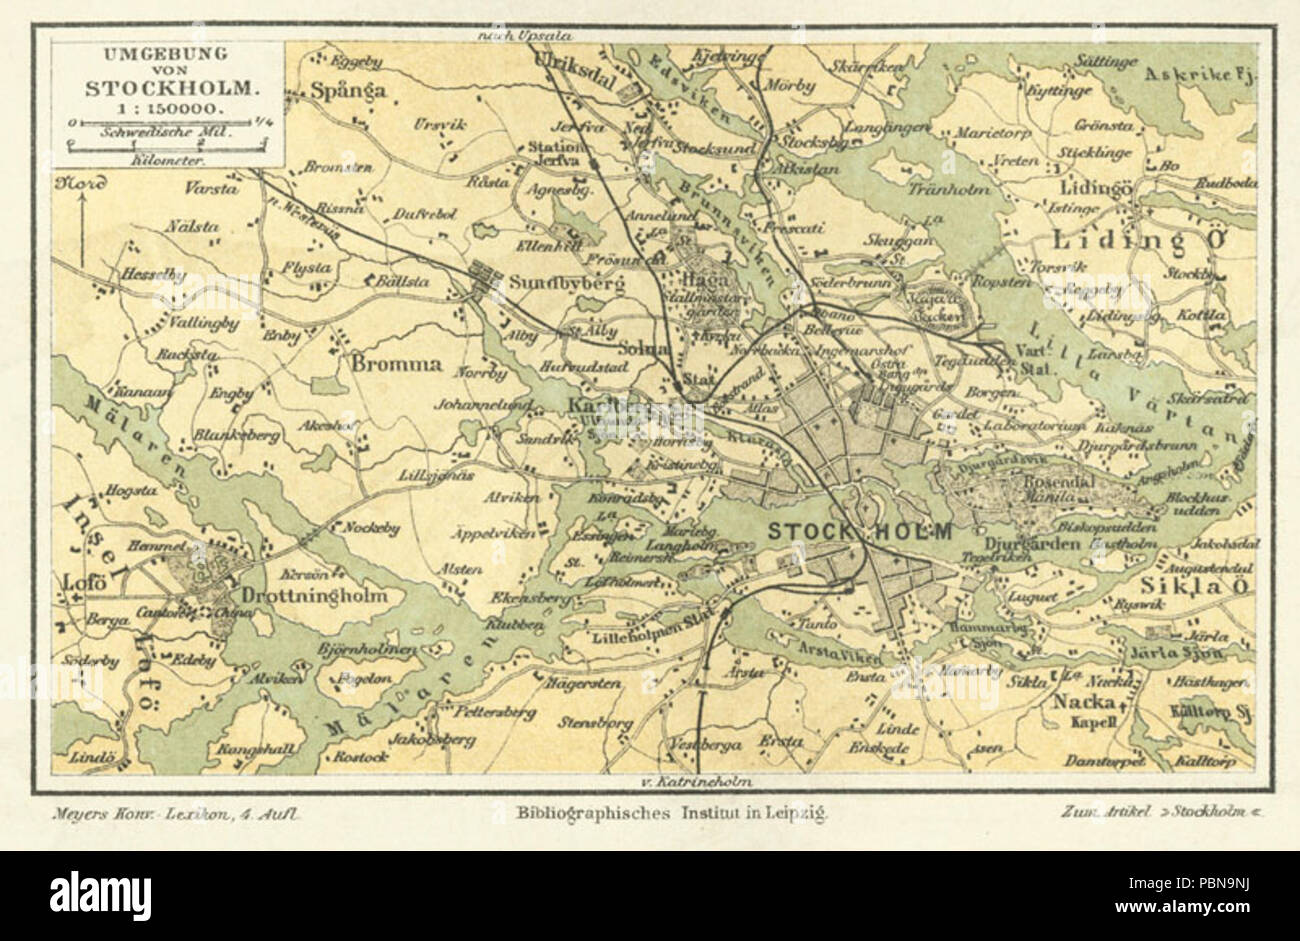 . Deutsch: Umgebung von Stoccolma 1 : 150000 . circa 1889 1028 Meyers b15 s0339a Foto Stock